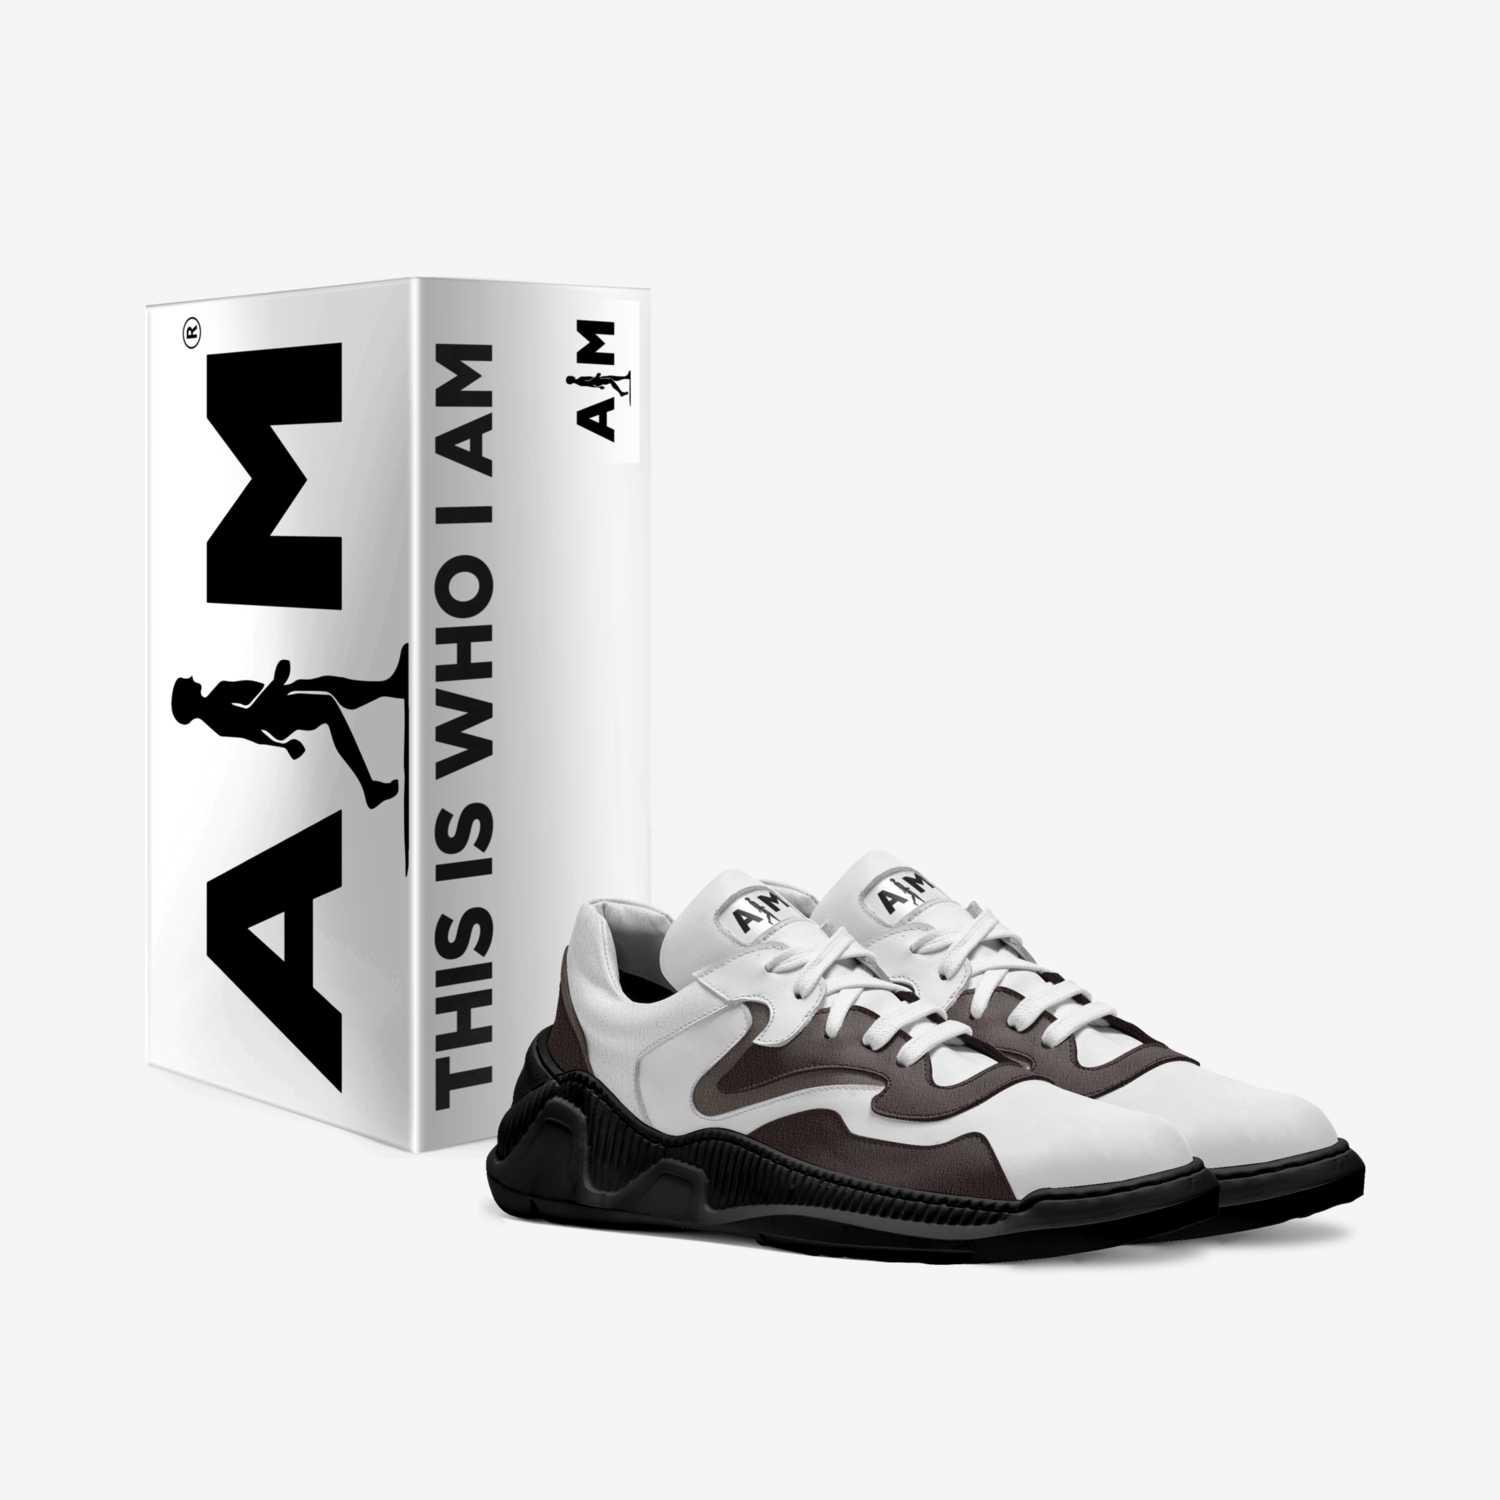 AIM Attitude Sport custom made in Italy shoes by Aim Attitude | Box view